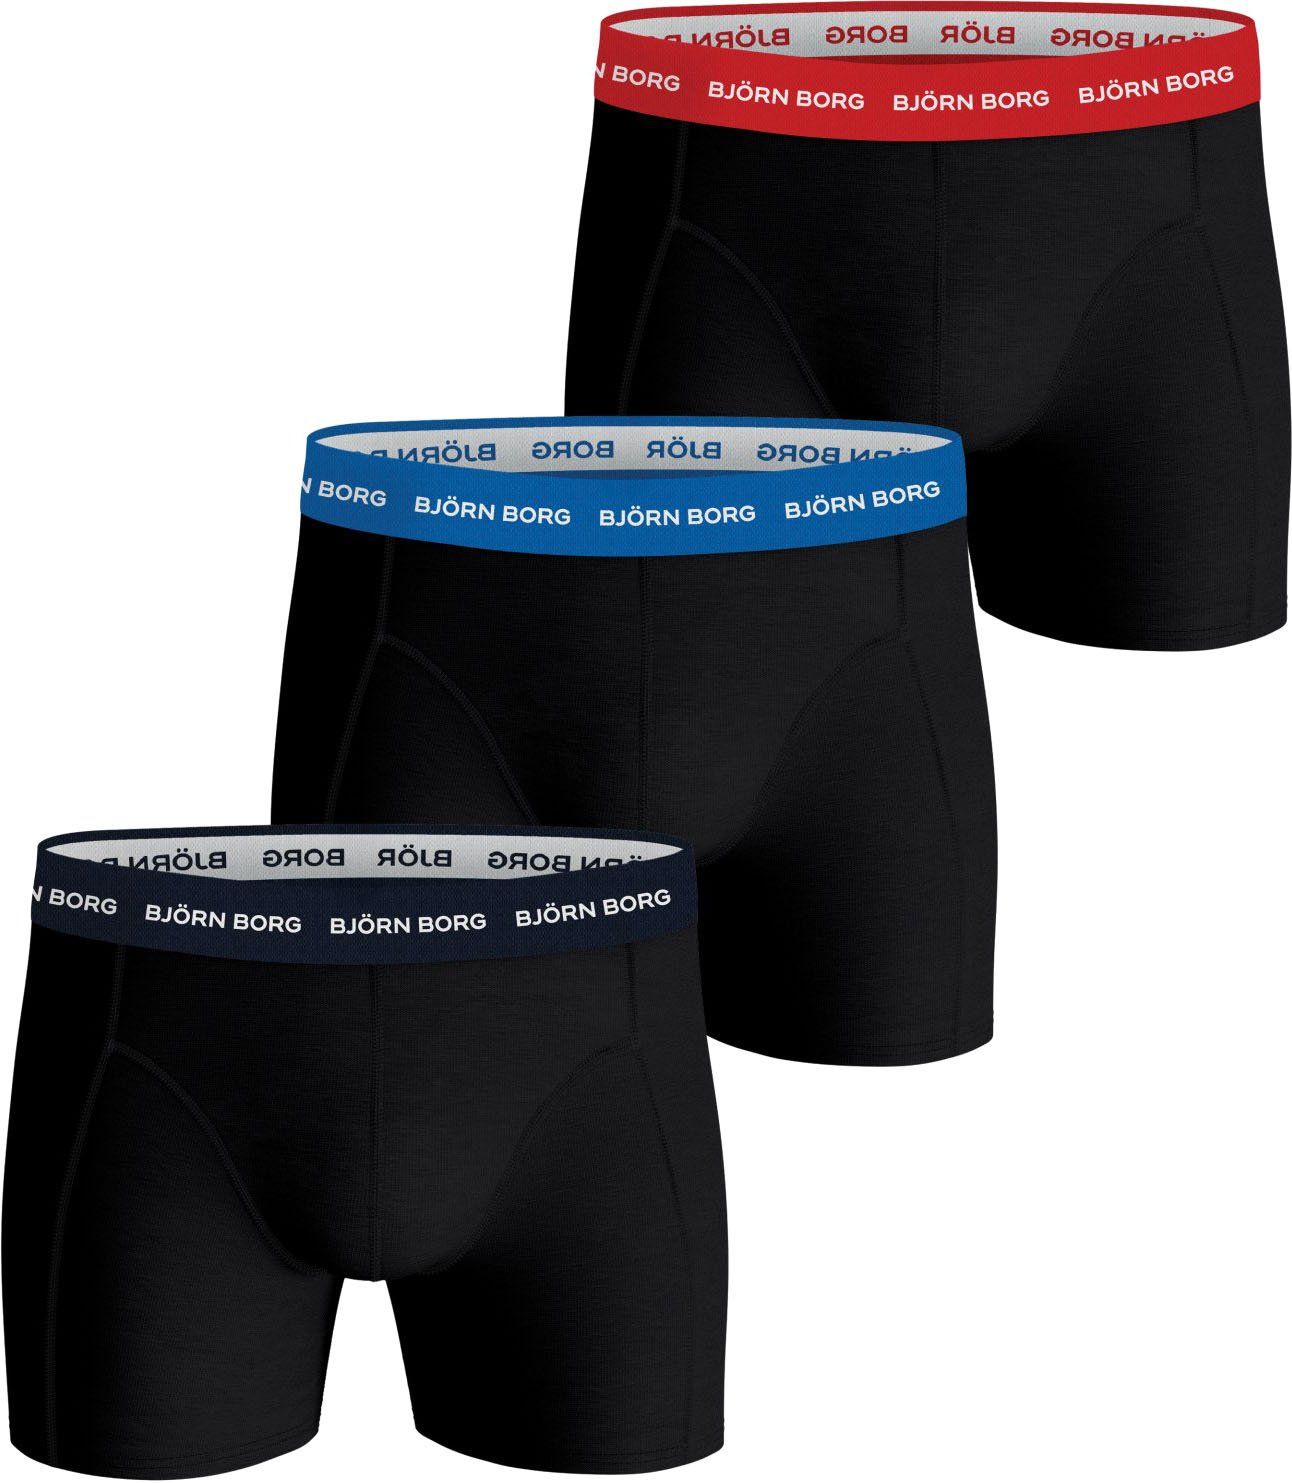 Bjorn Borg Boxer Shorts 3-Pack Sammy Multicolour Black size M